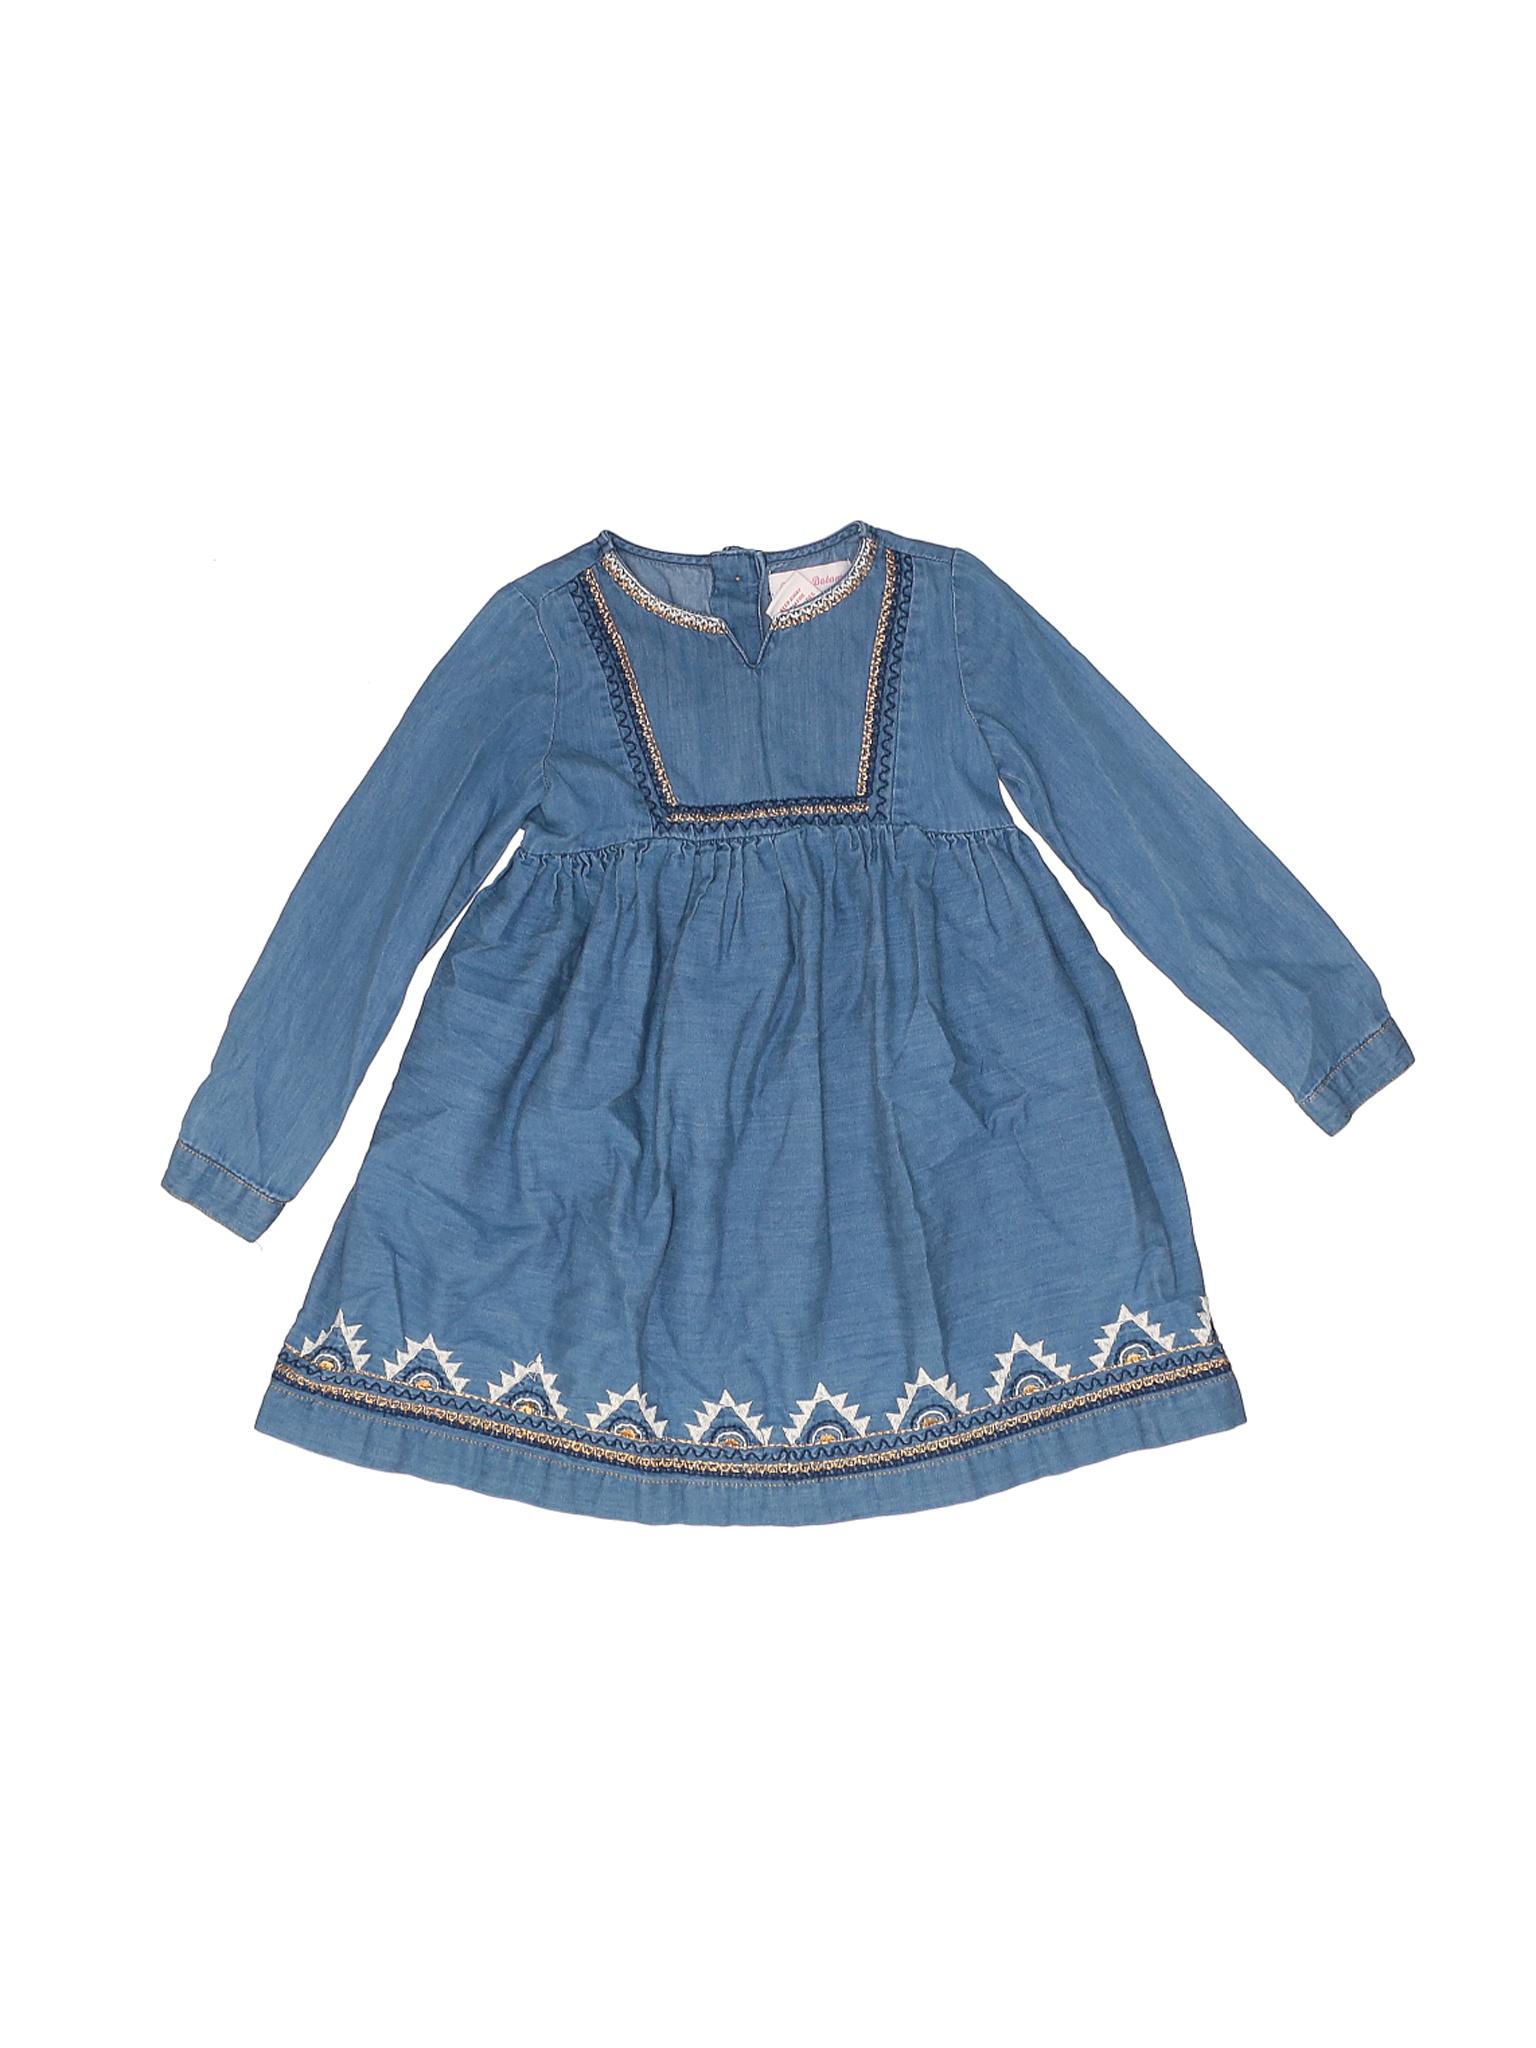 Tommy Bahama Girls Blue Dress 4T | eBay